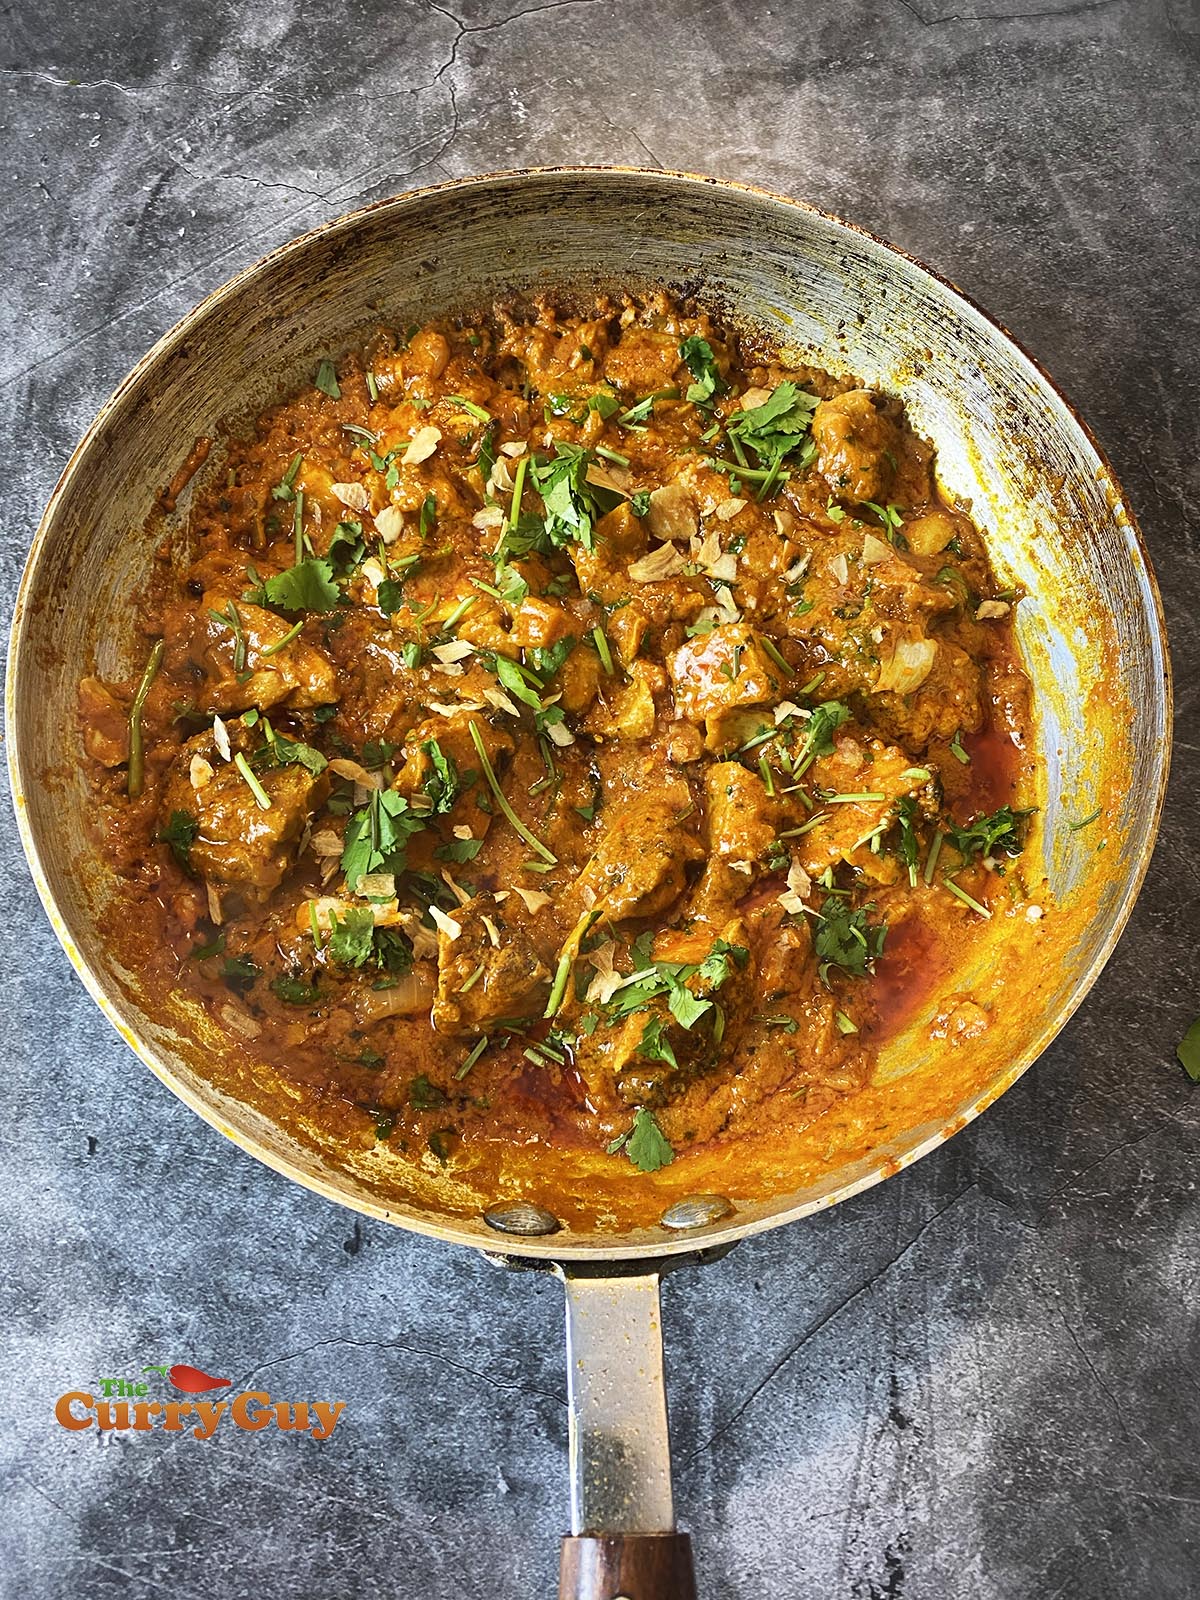 finished chicken chilli garlic curry